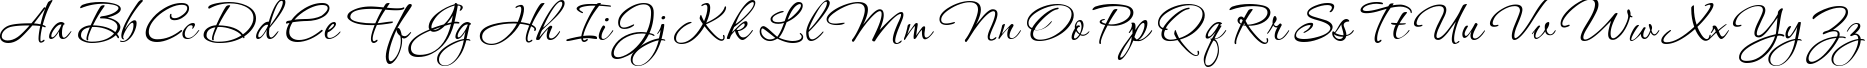 Пример написания английского алфавита шрифтом Corinthia